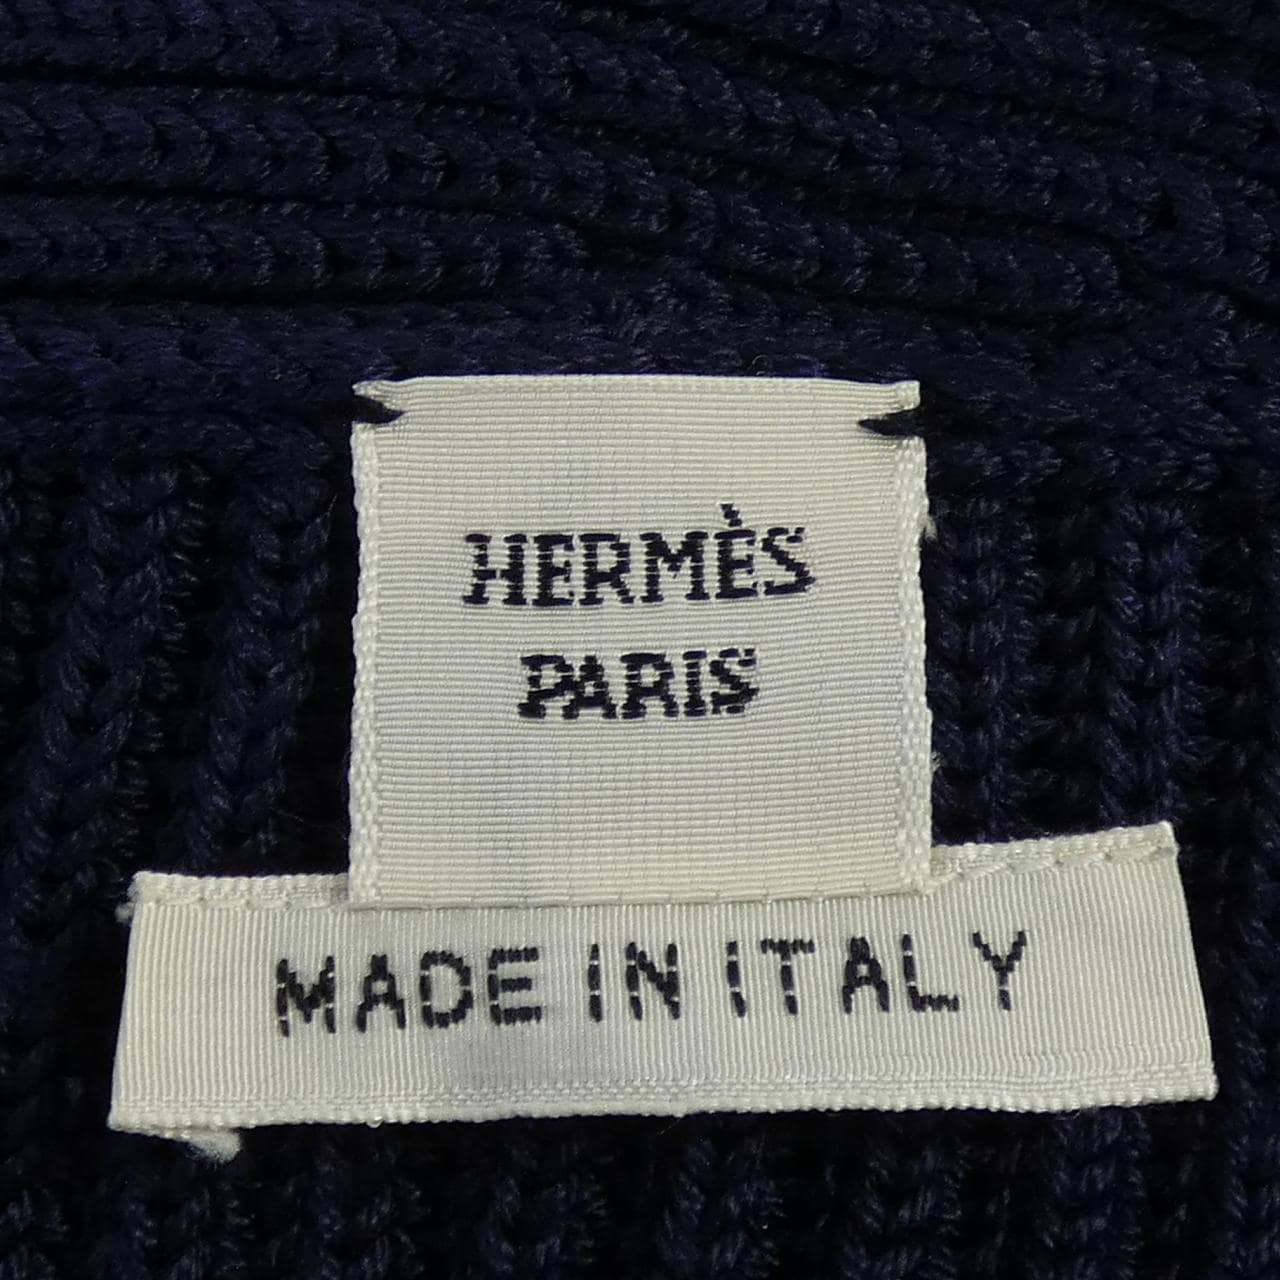 HERMES爱马仕针织品